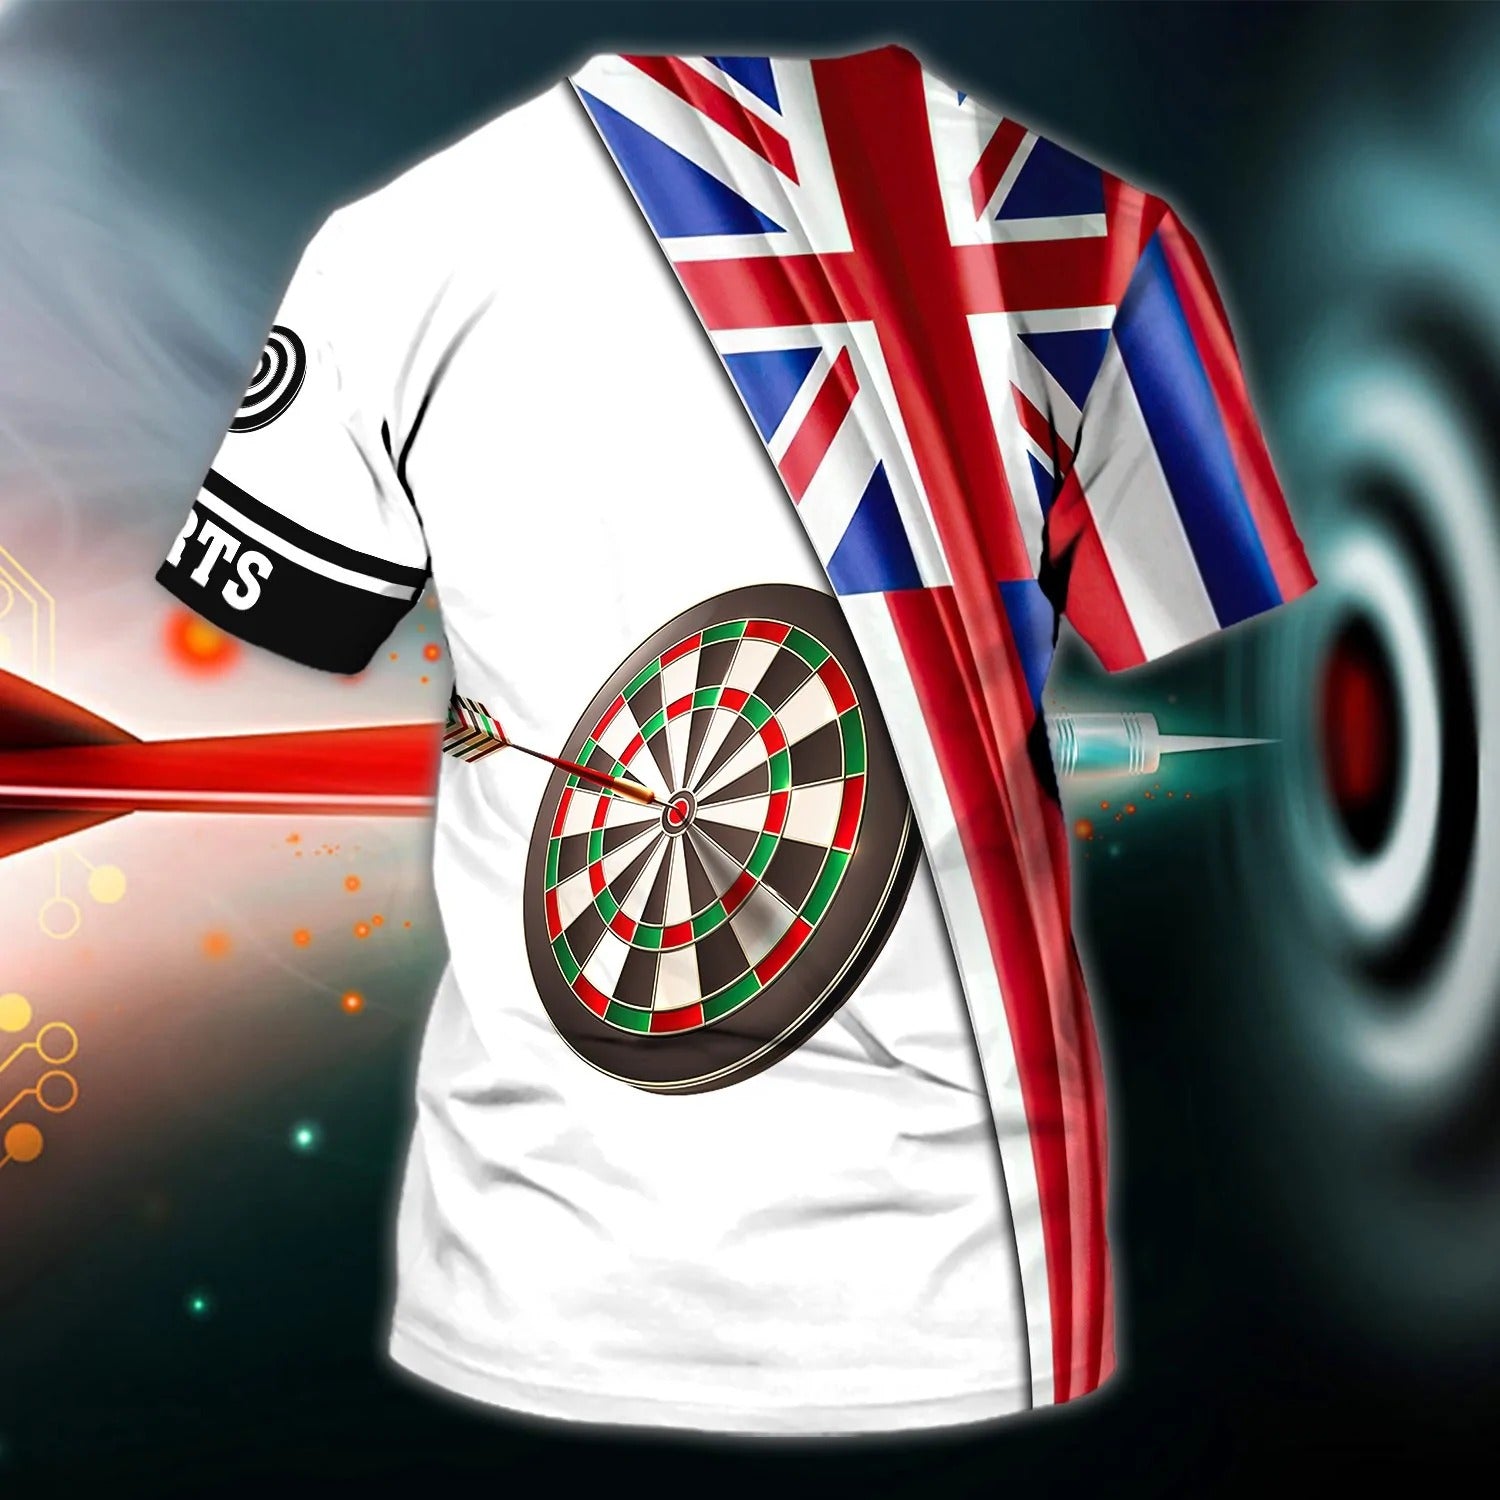 Customized 3D UK Dart Shirt Dart Player Team Uniform UK